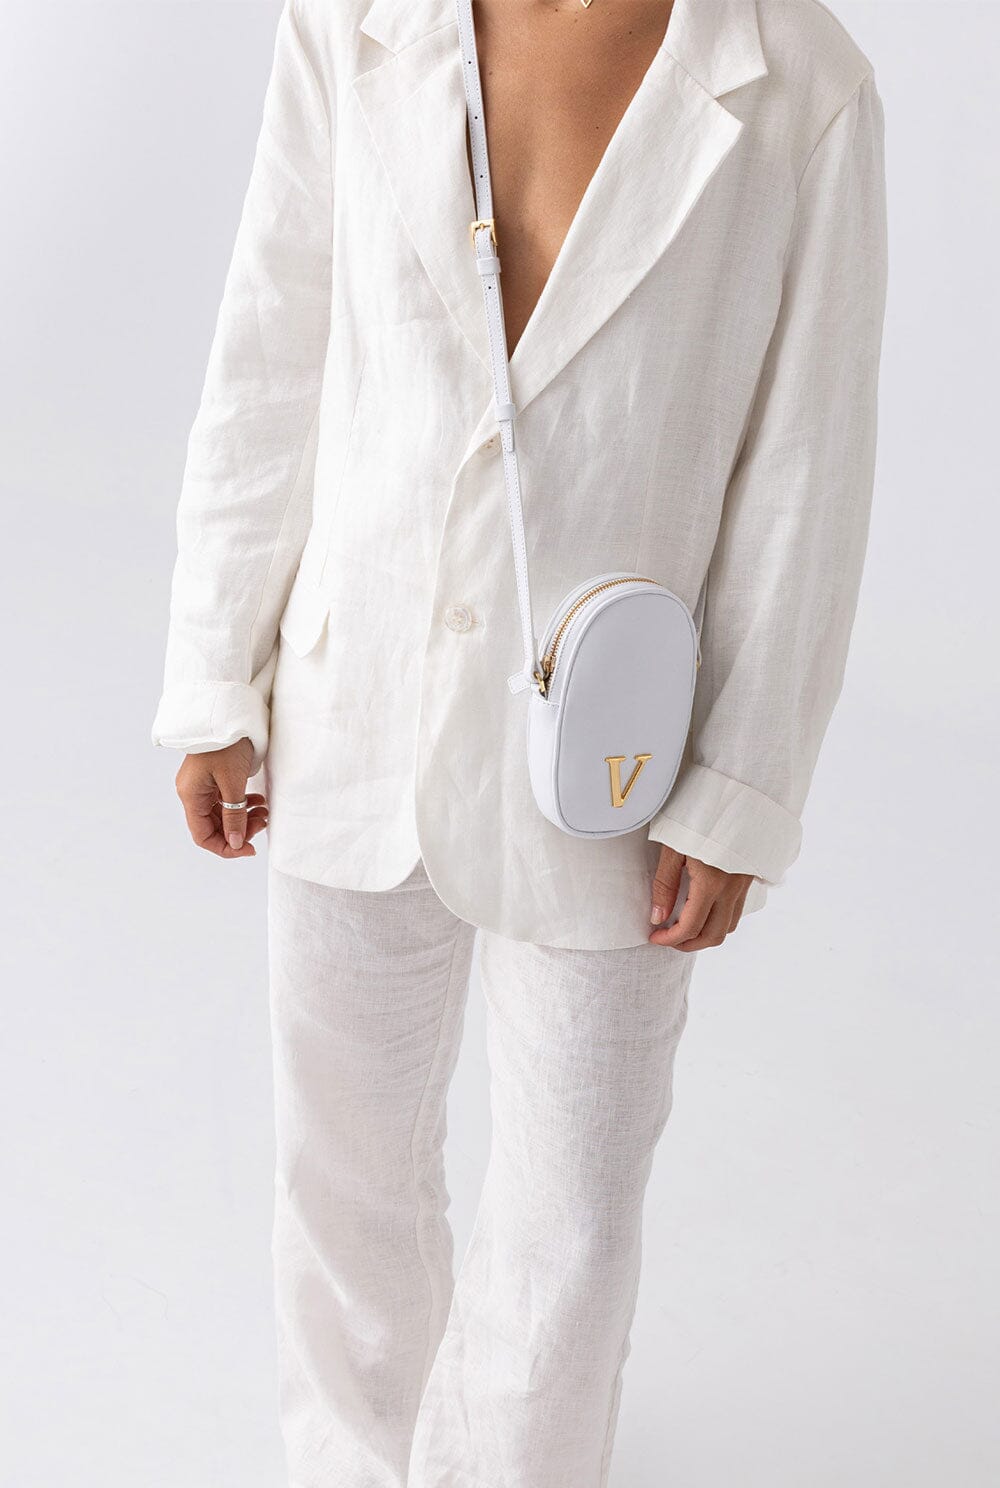 EGG BAG WHITE Mini bags The Villã Concept 